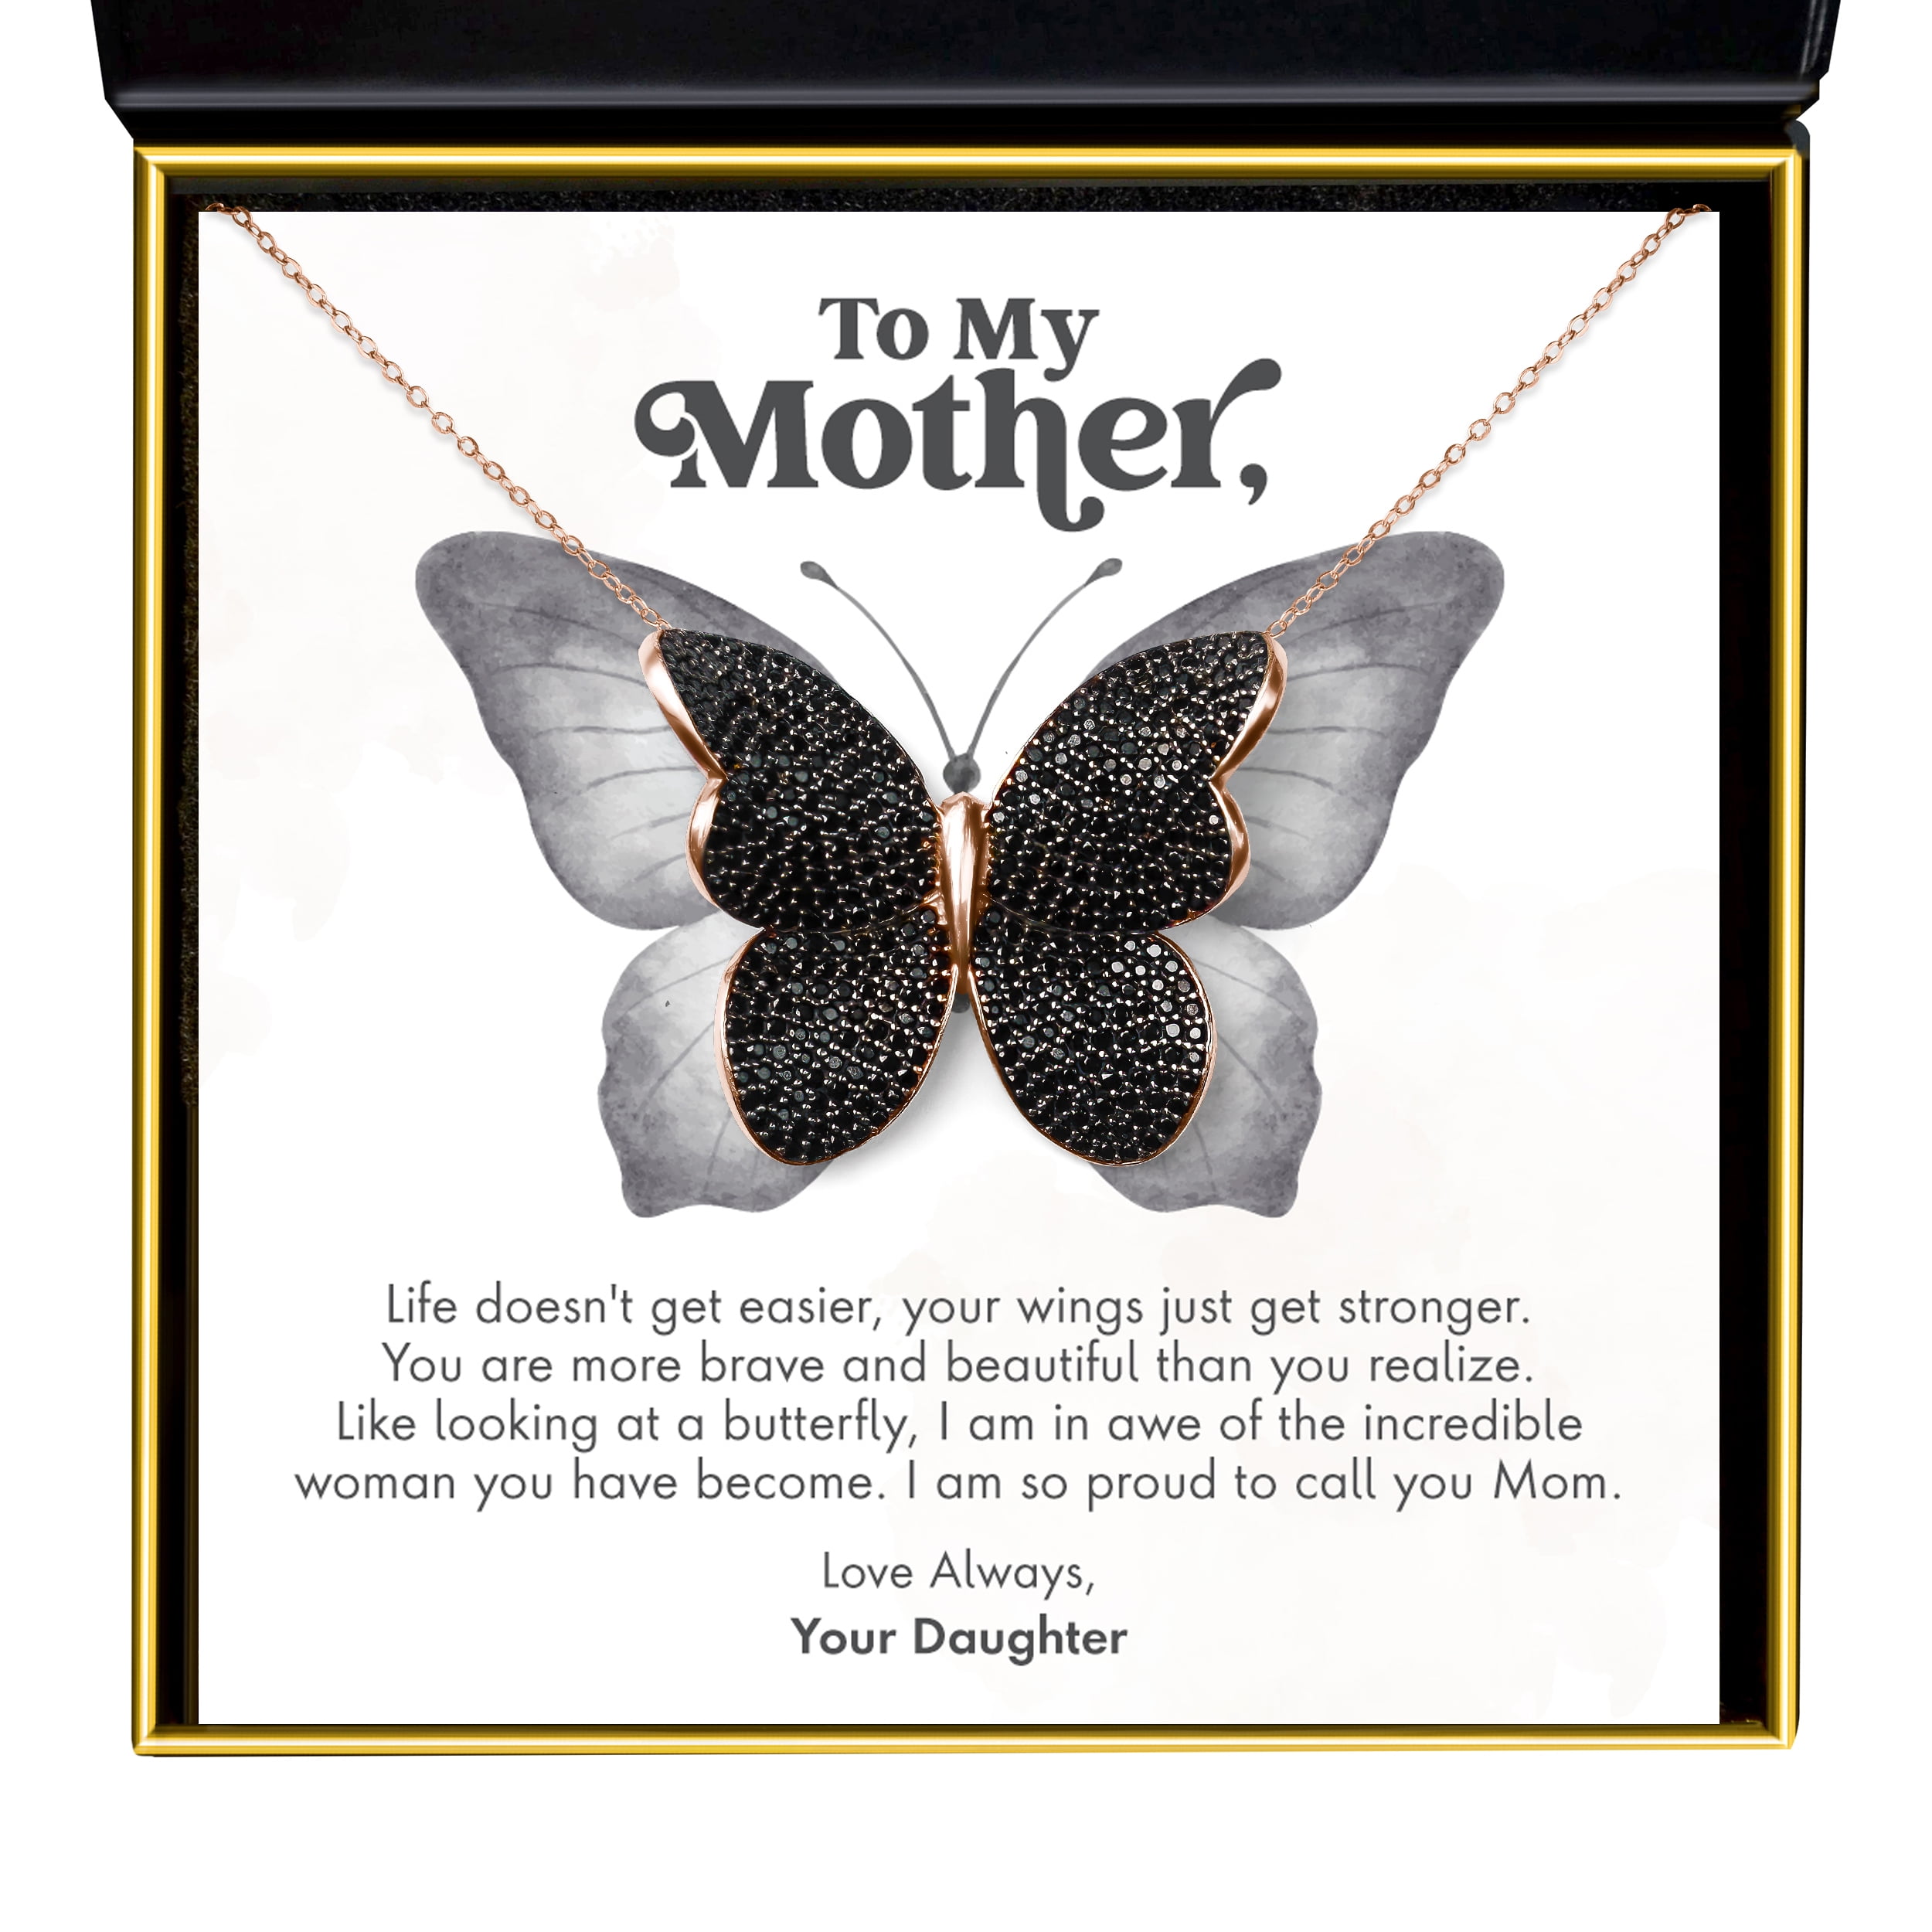 Black & Crystal Butterfly pendant necklace